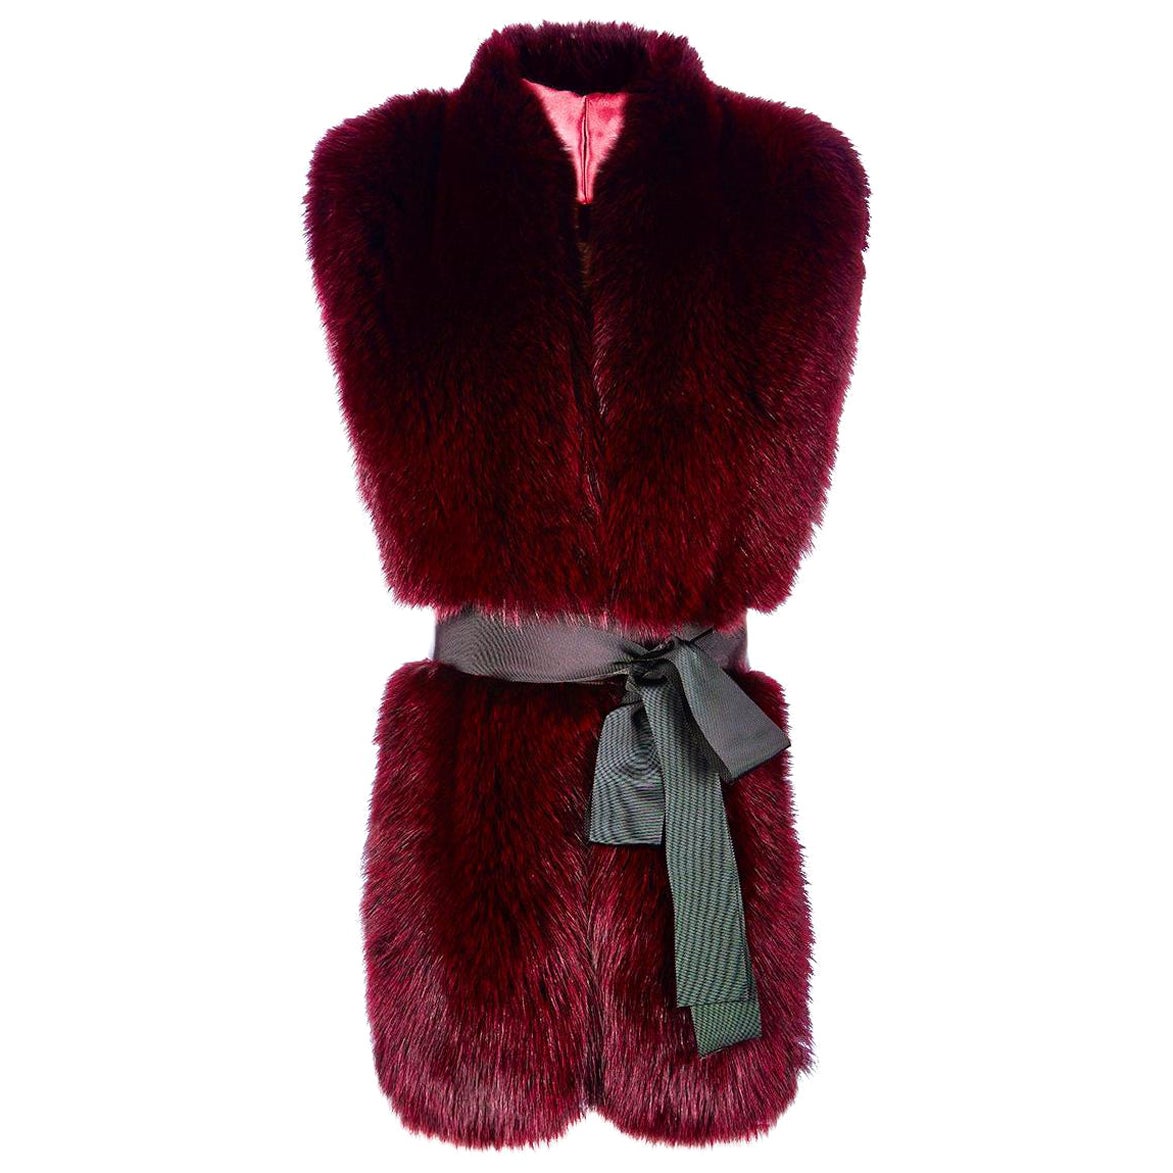 Verheyen London Legacy Stole Scarf in Garnet Burgundy Fox Fur with Belt 